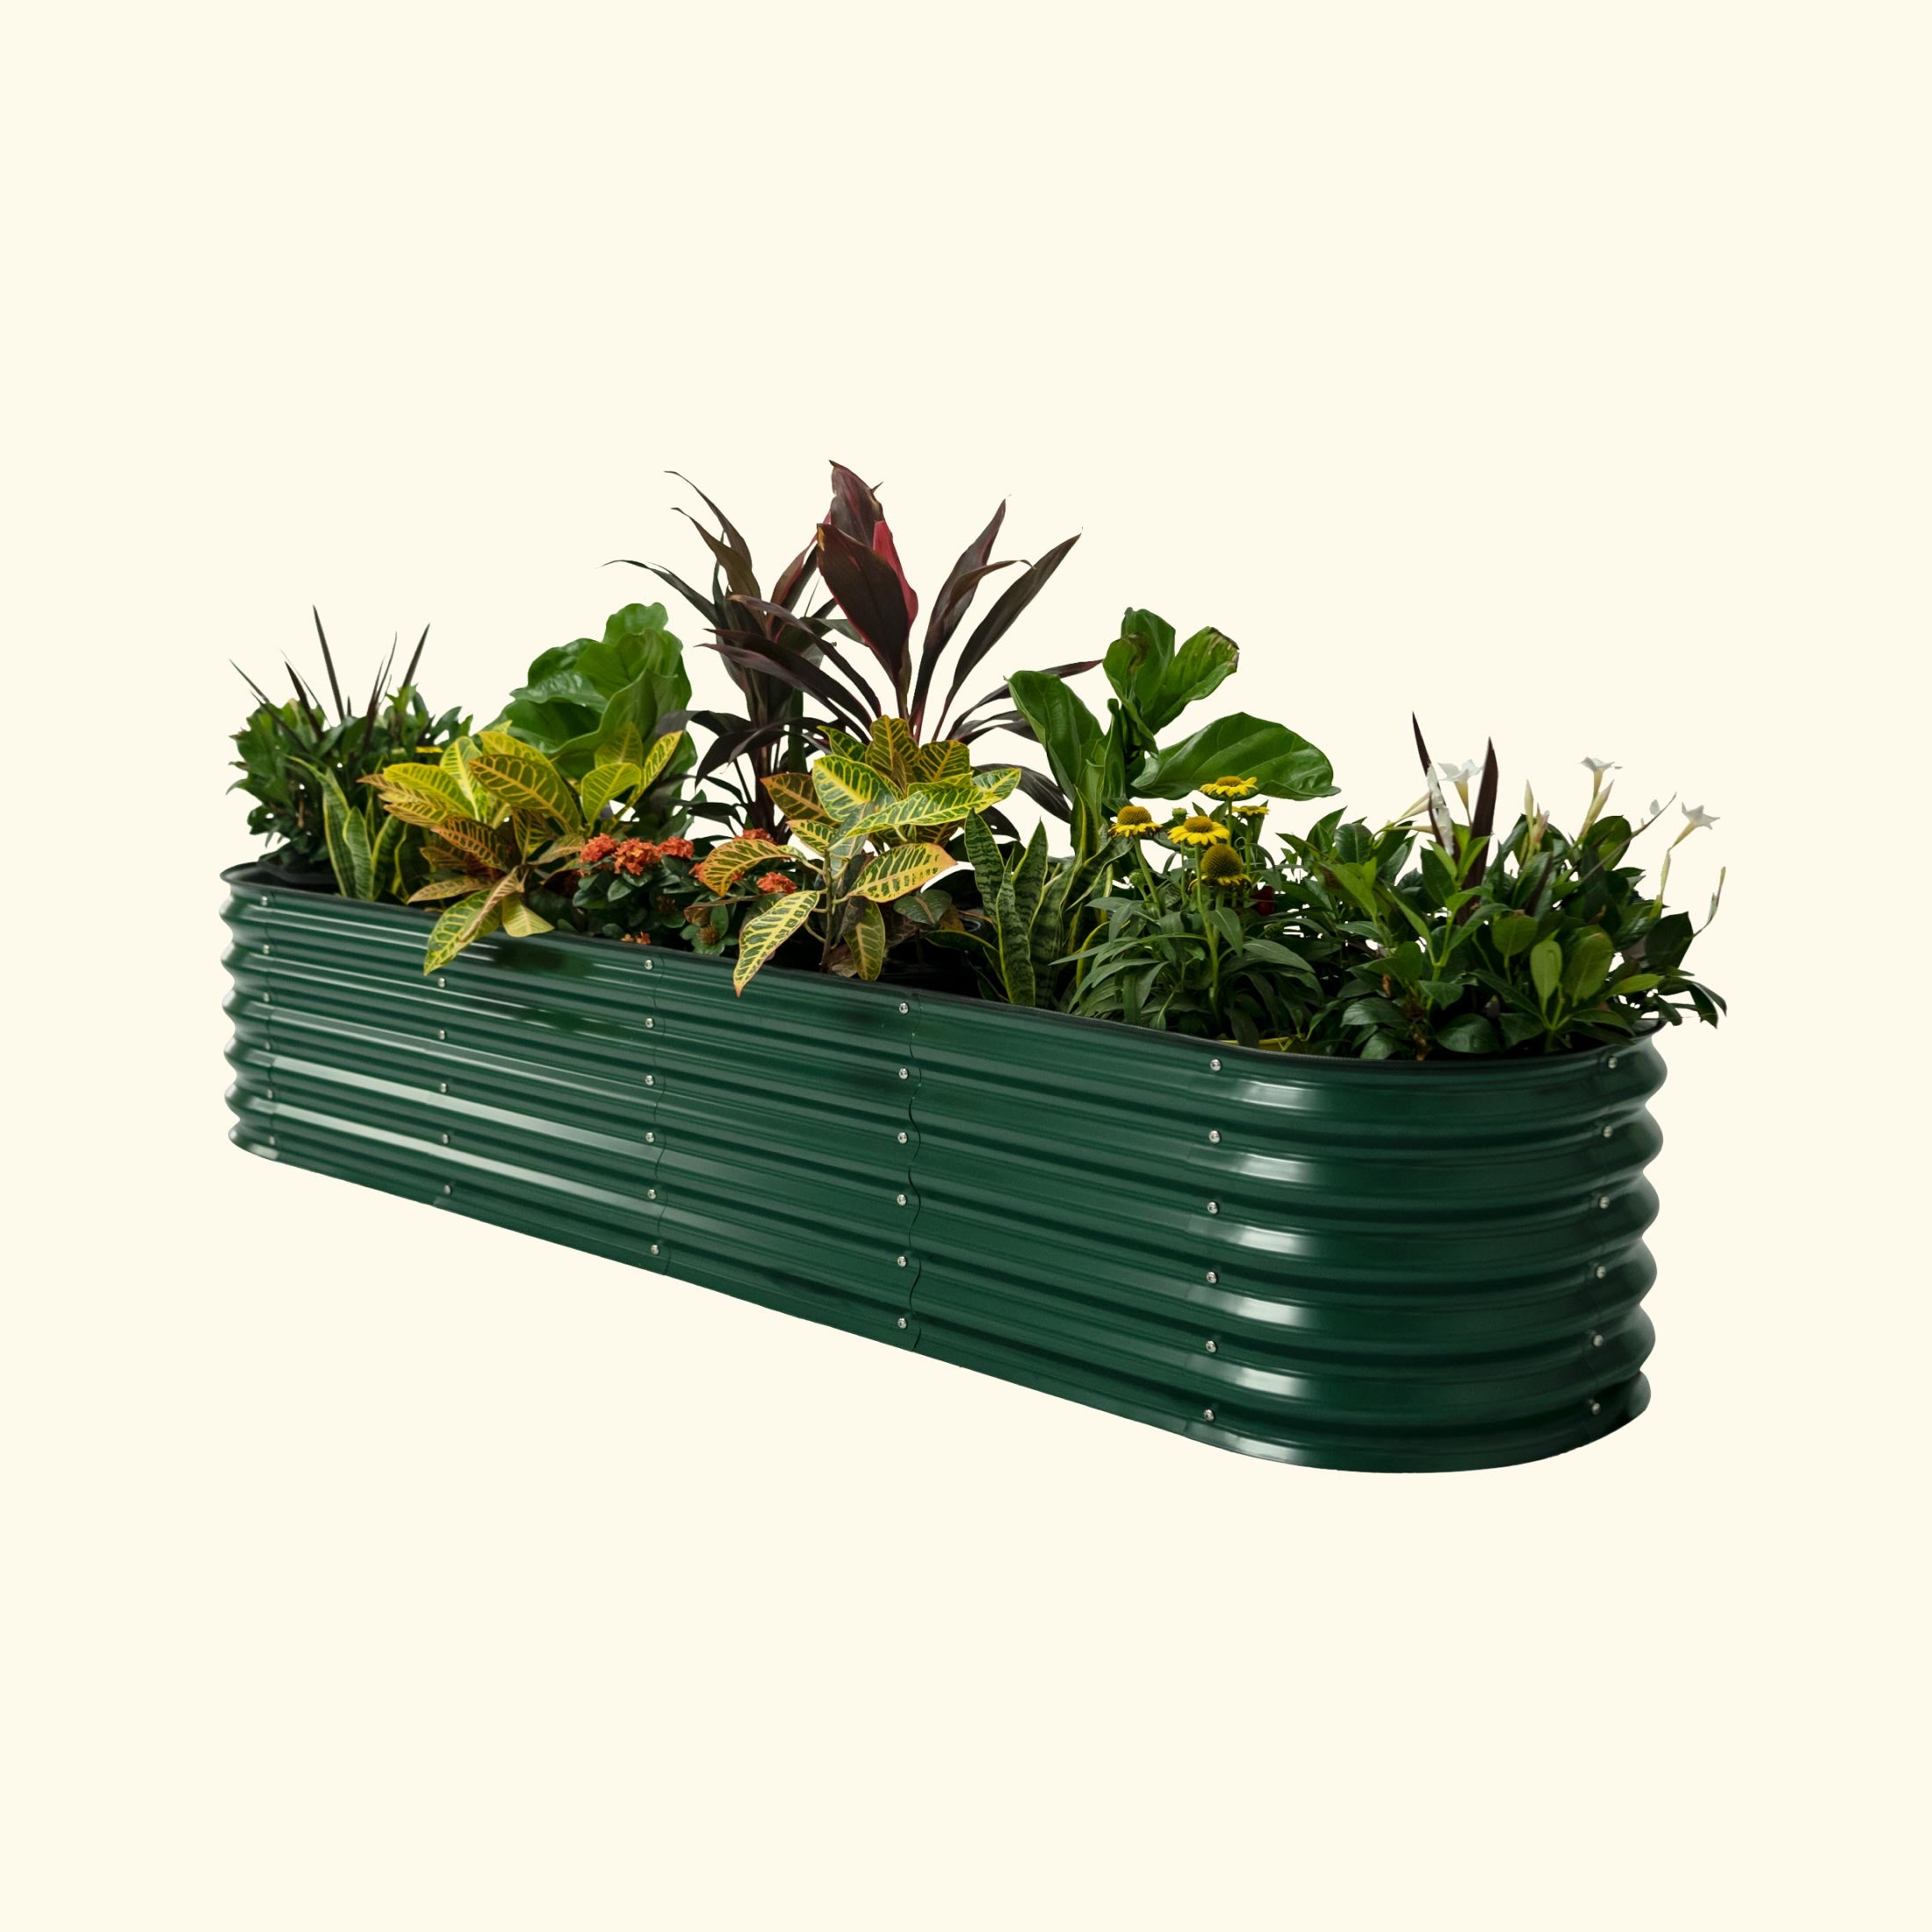 Vego Graden | 17" Tall 9 In 1 Modular Metal Raised Garden Bed Kit British Green